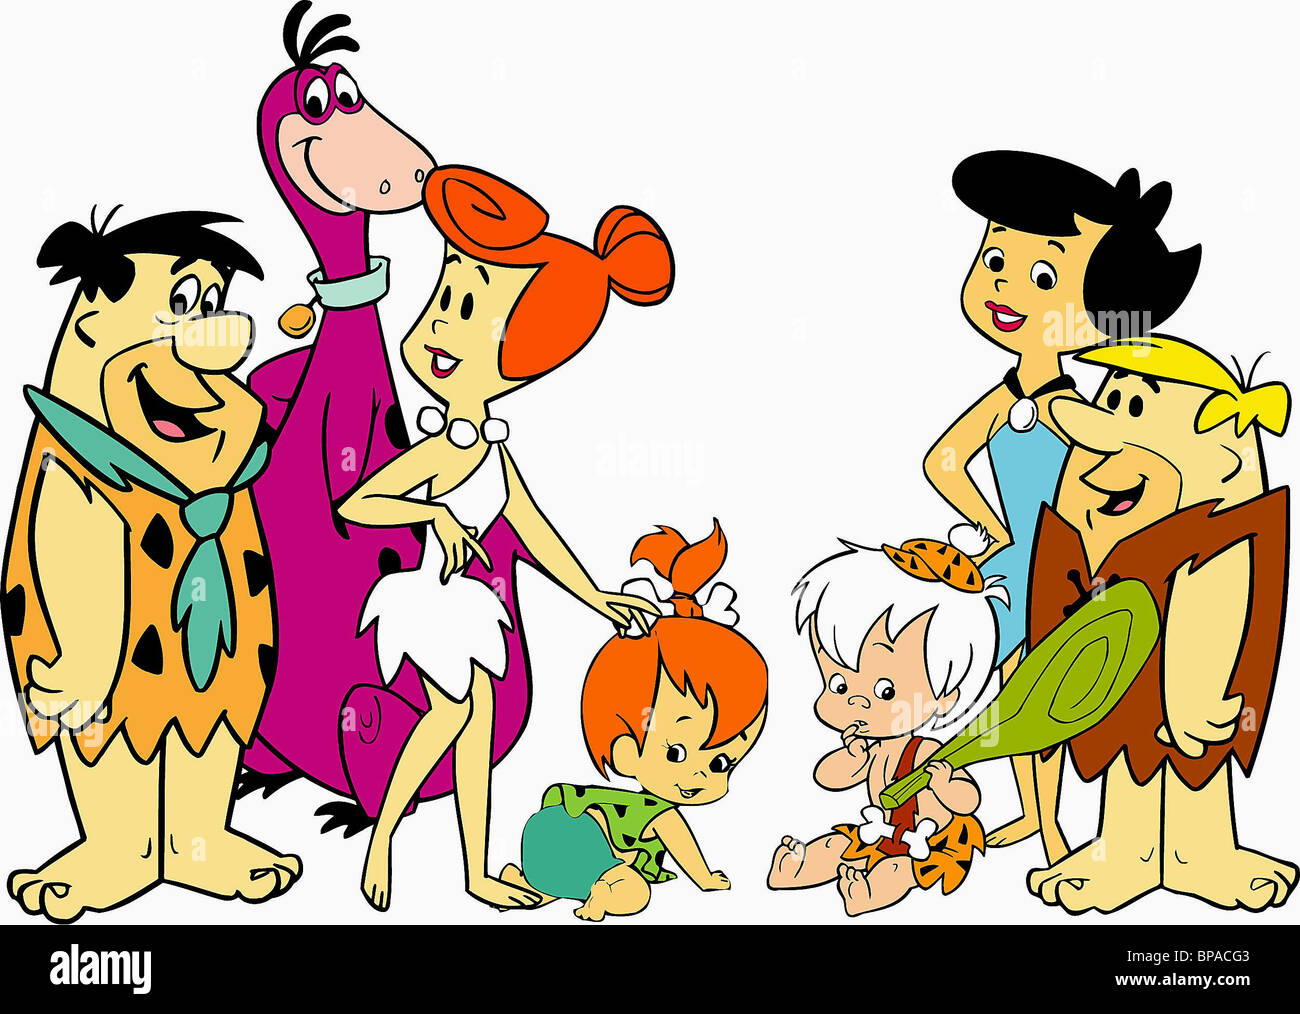 Barney Rubble Fred Flintstone Stockfotos Und Bilder Kaufen Alamy